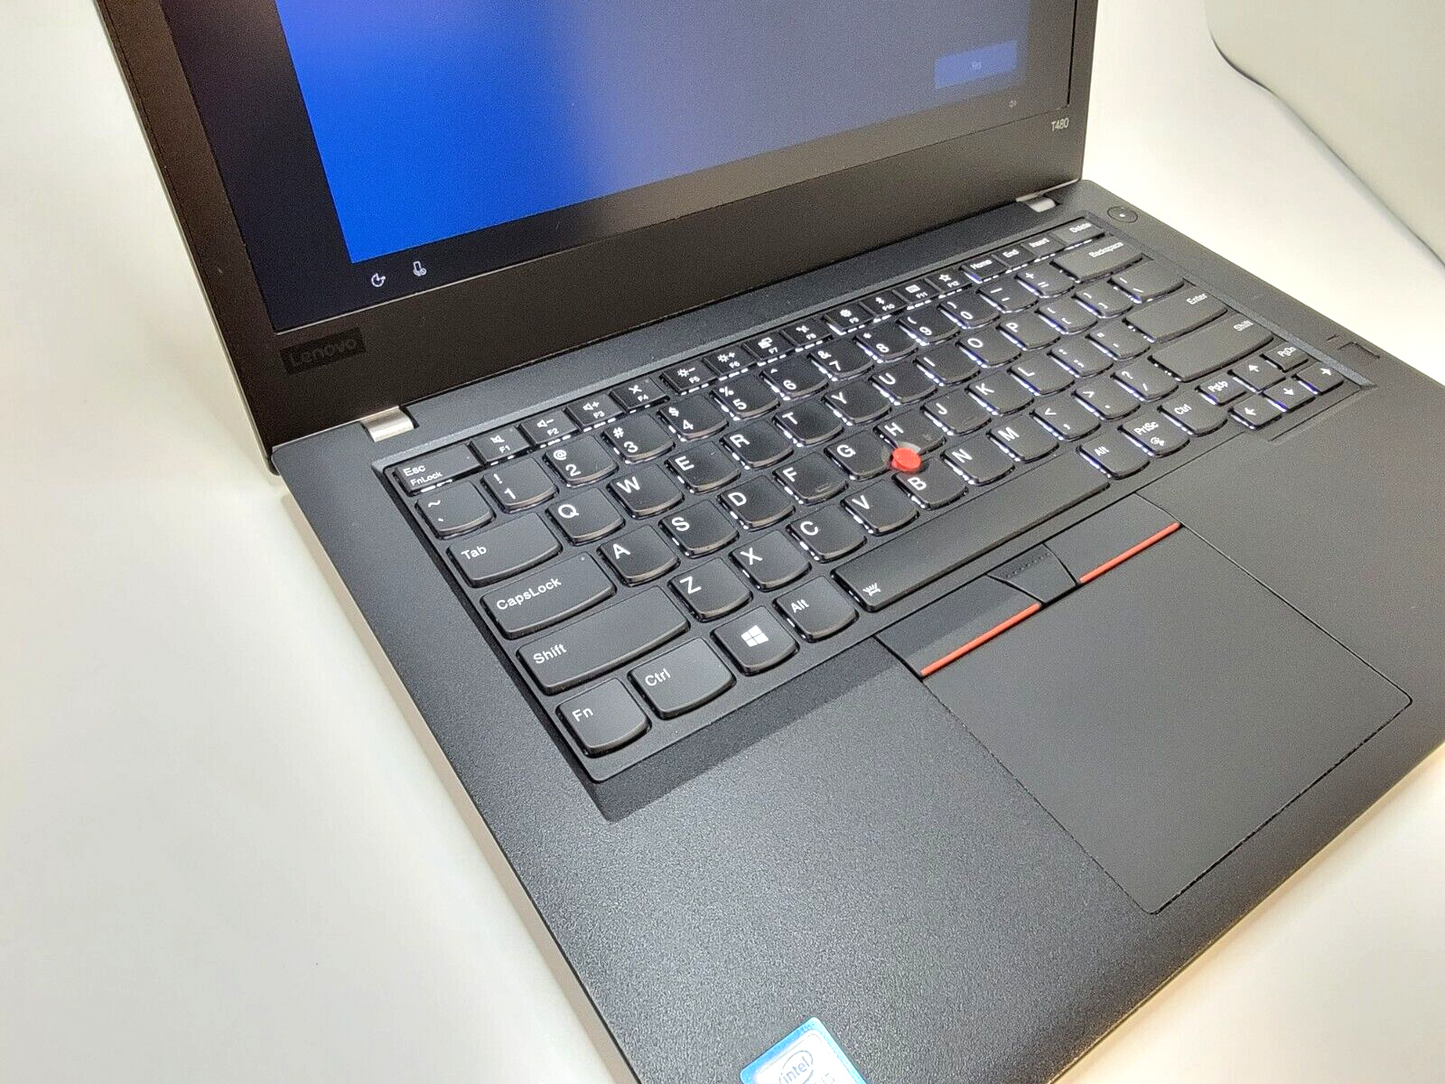 Laptop Lenovo T480 intel core i5 with 8GB RAM and 256GB SSD - Refurbrished